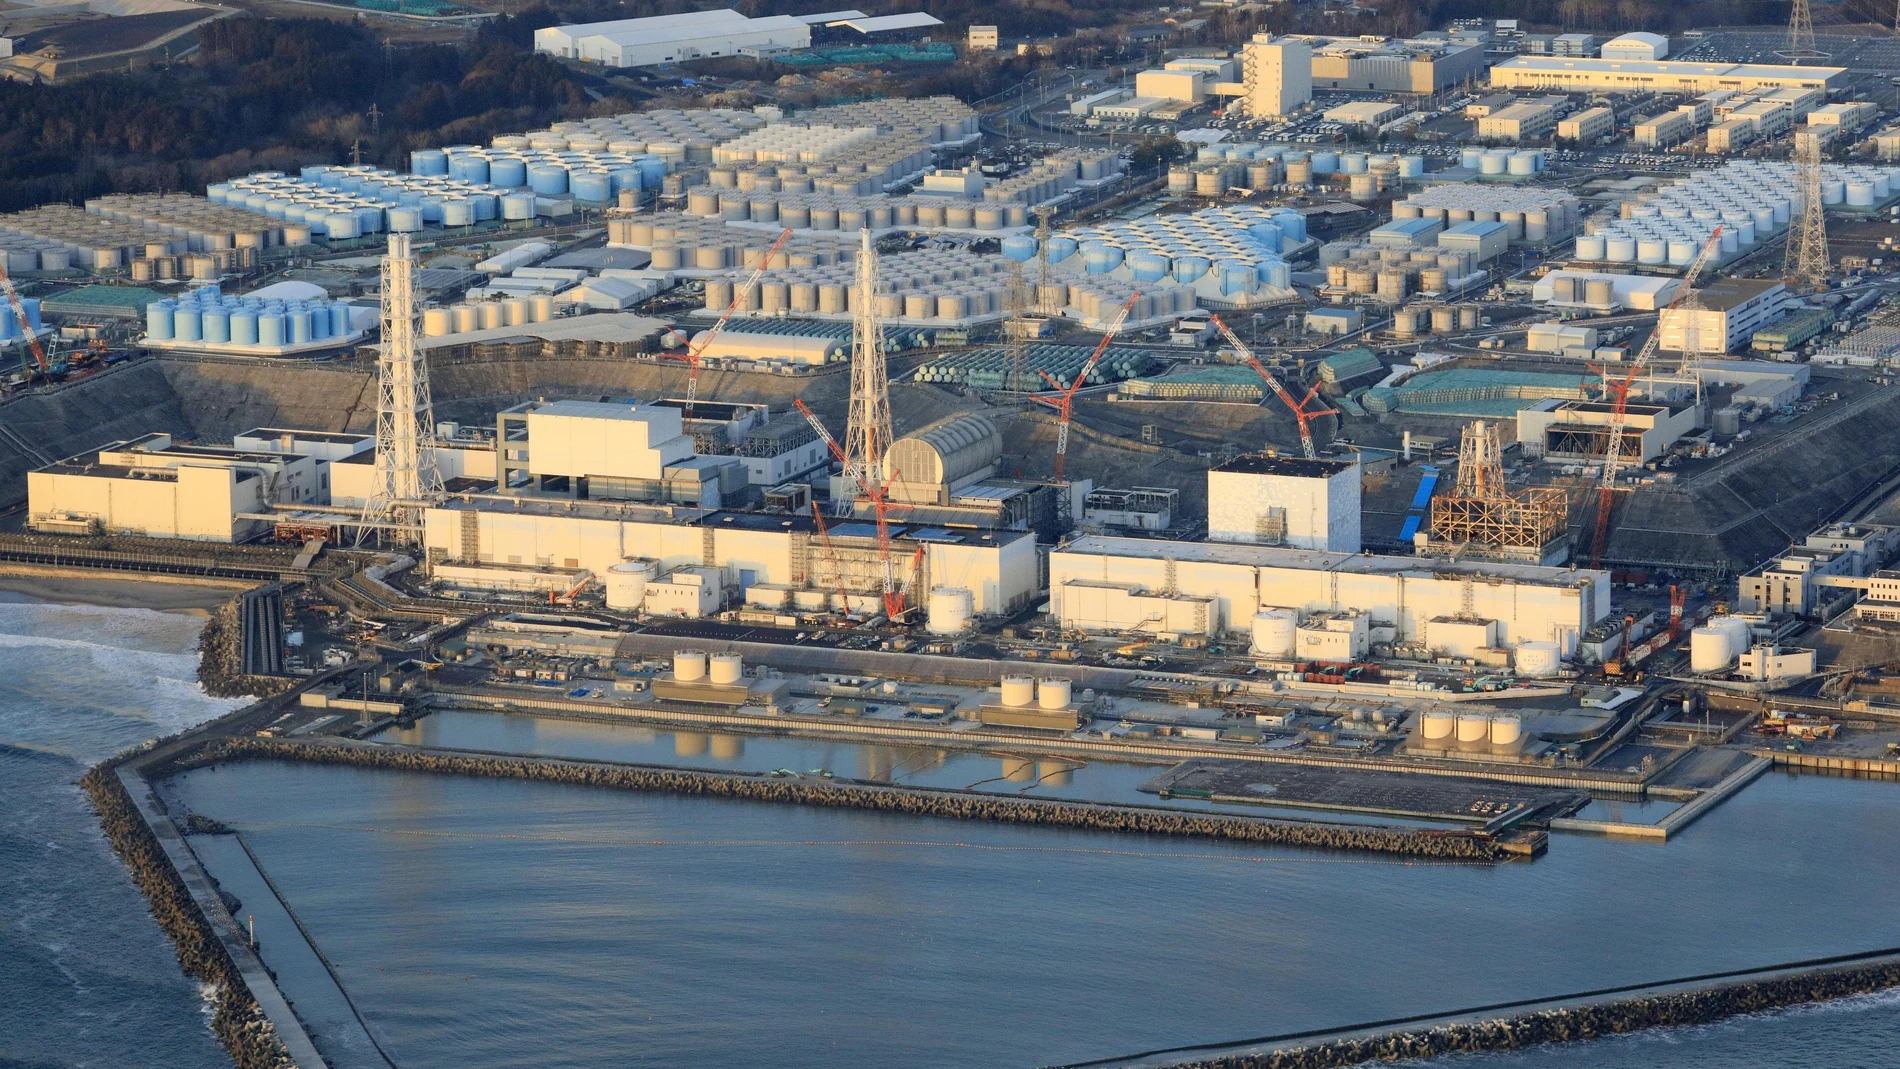 La planta nuclear de Fukushima Dai-ichi